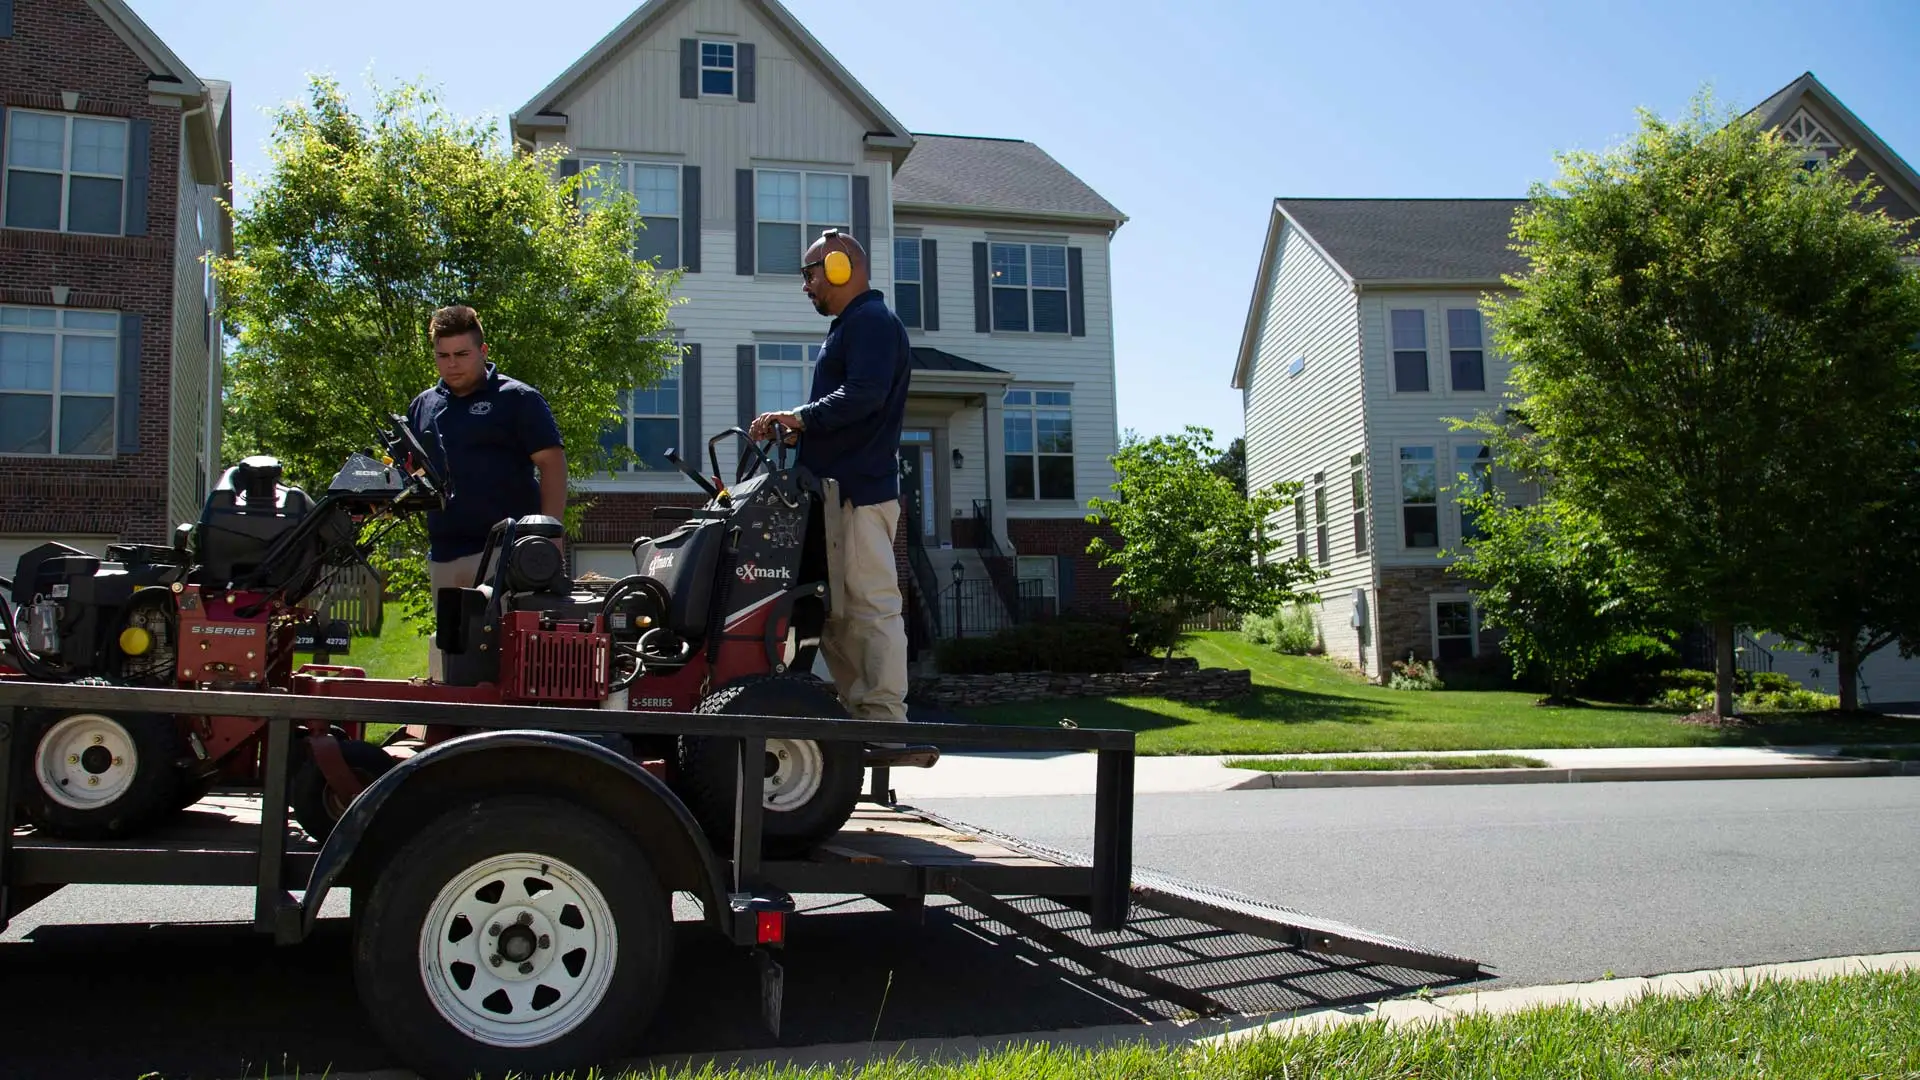 Hambleton Lawn & Landscape professionals unloading truck in neighborhood in Sterling, VA.